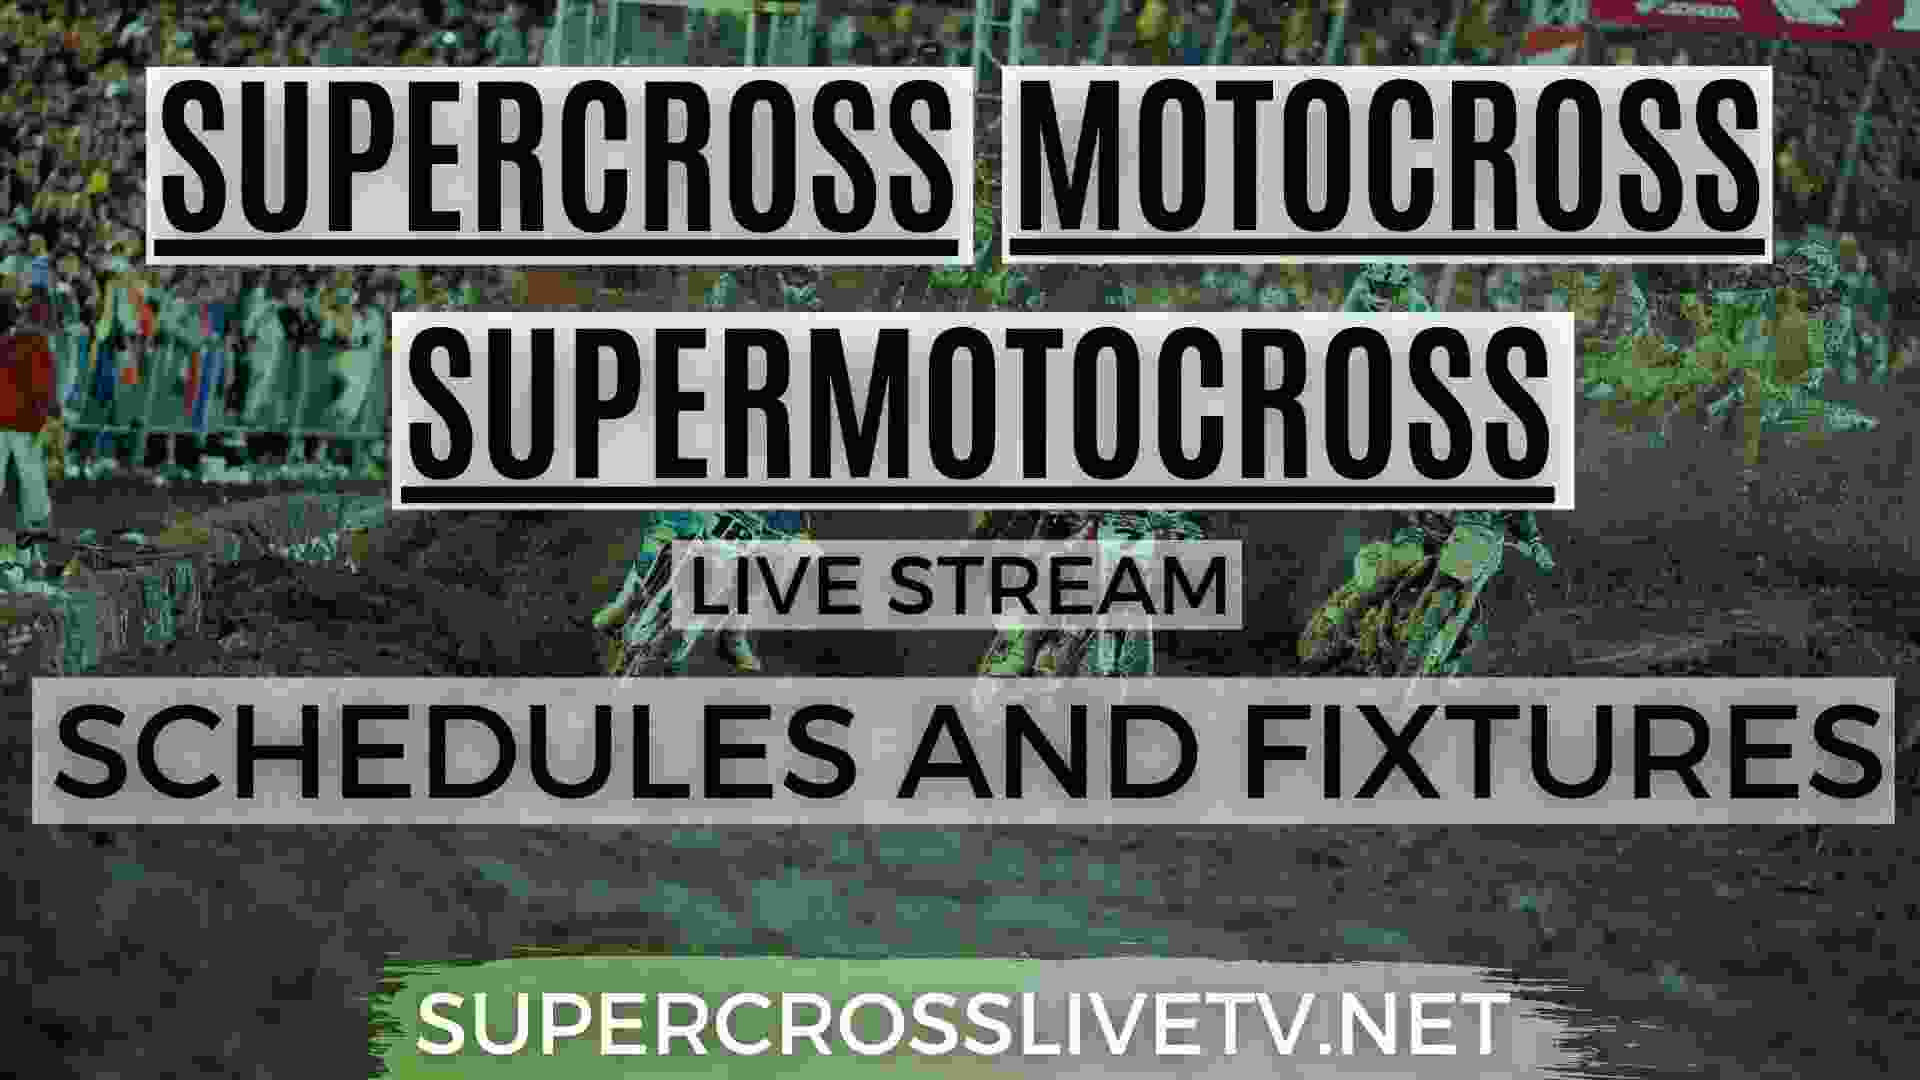 ama-monster-energy-supercross-schedule-and-fixtures